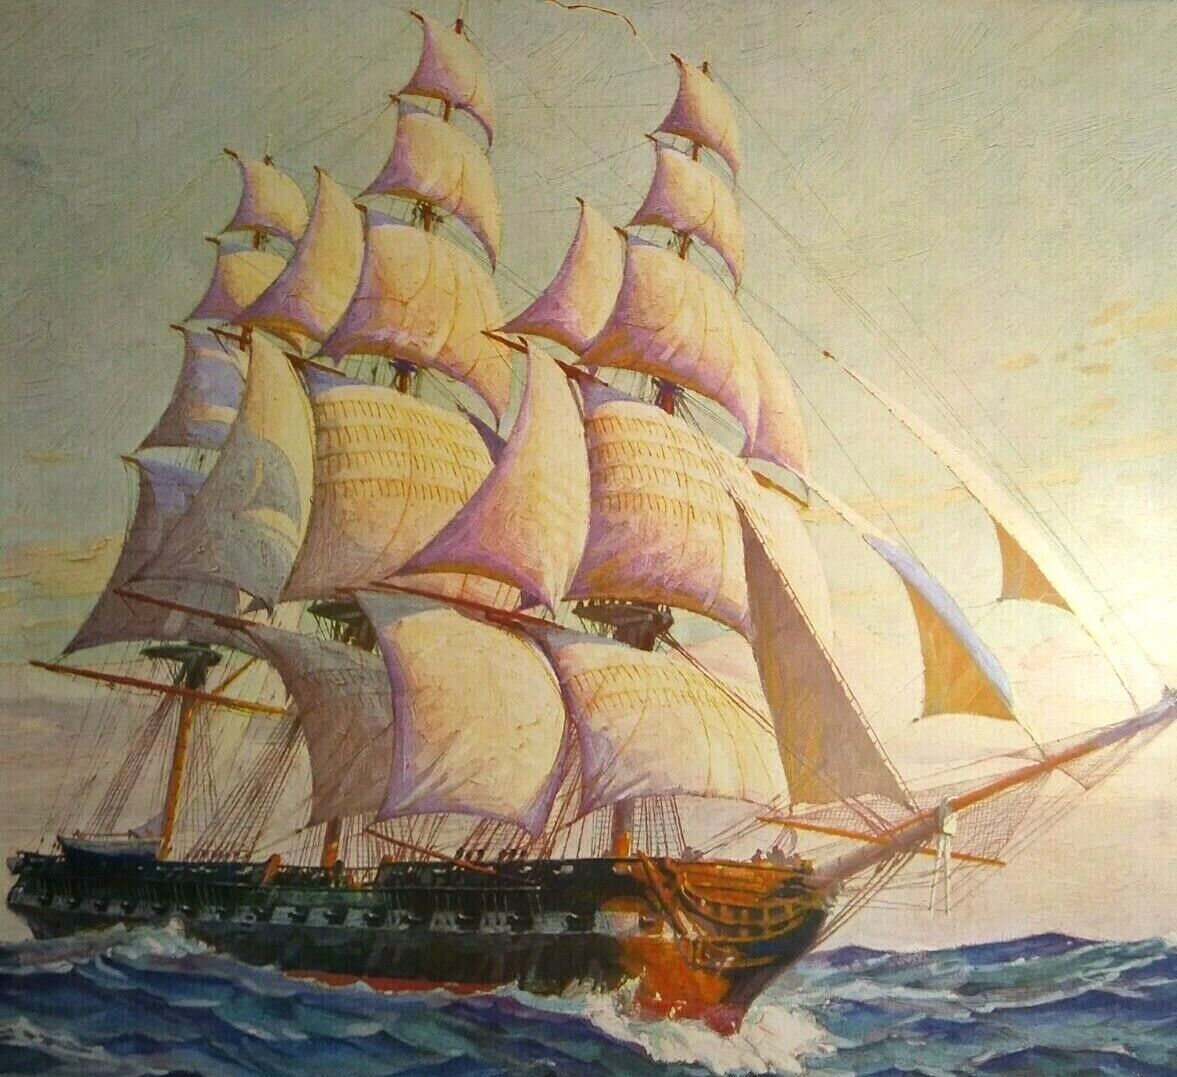 Pirate Ship Art Print 1930s Original Vintage Lithograph Nautical Ocean Sailing